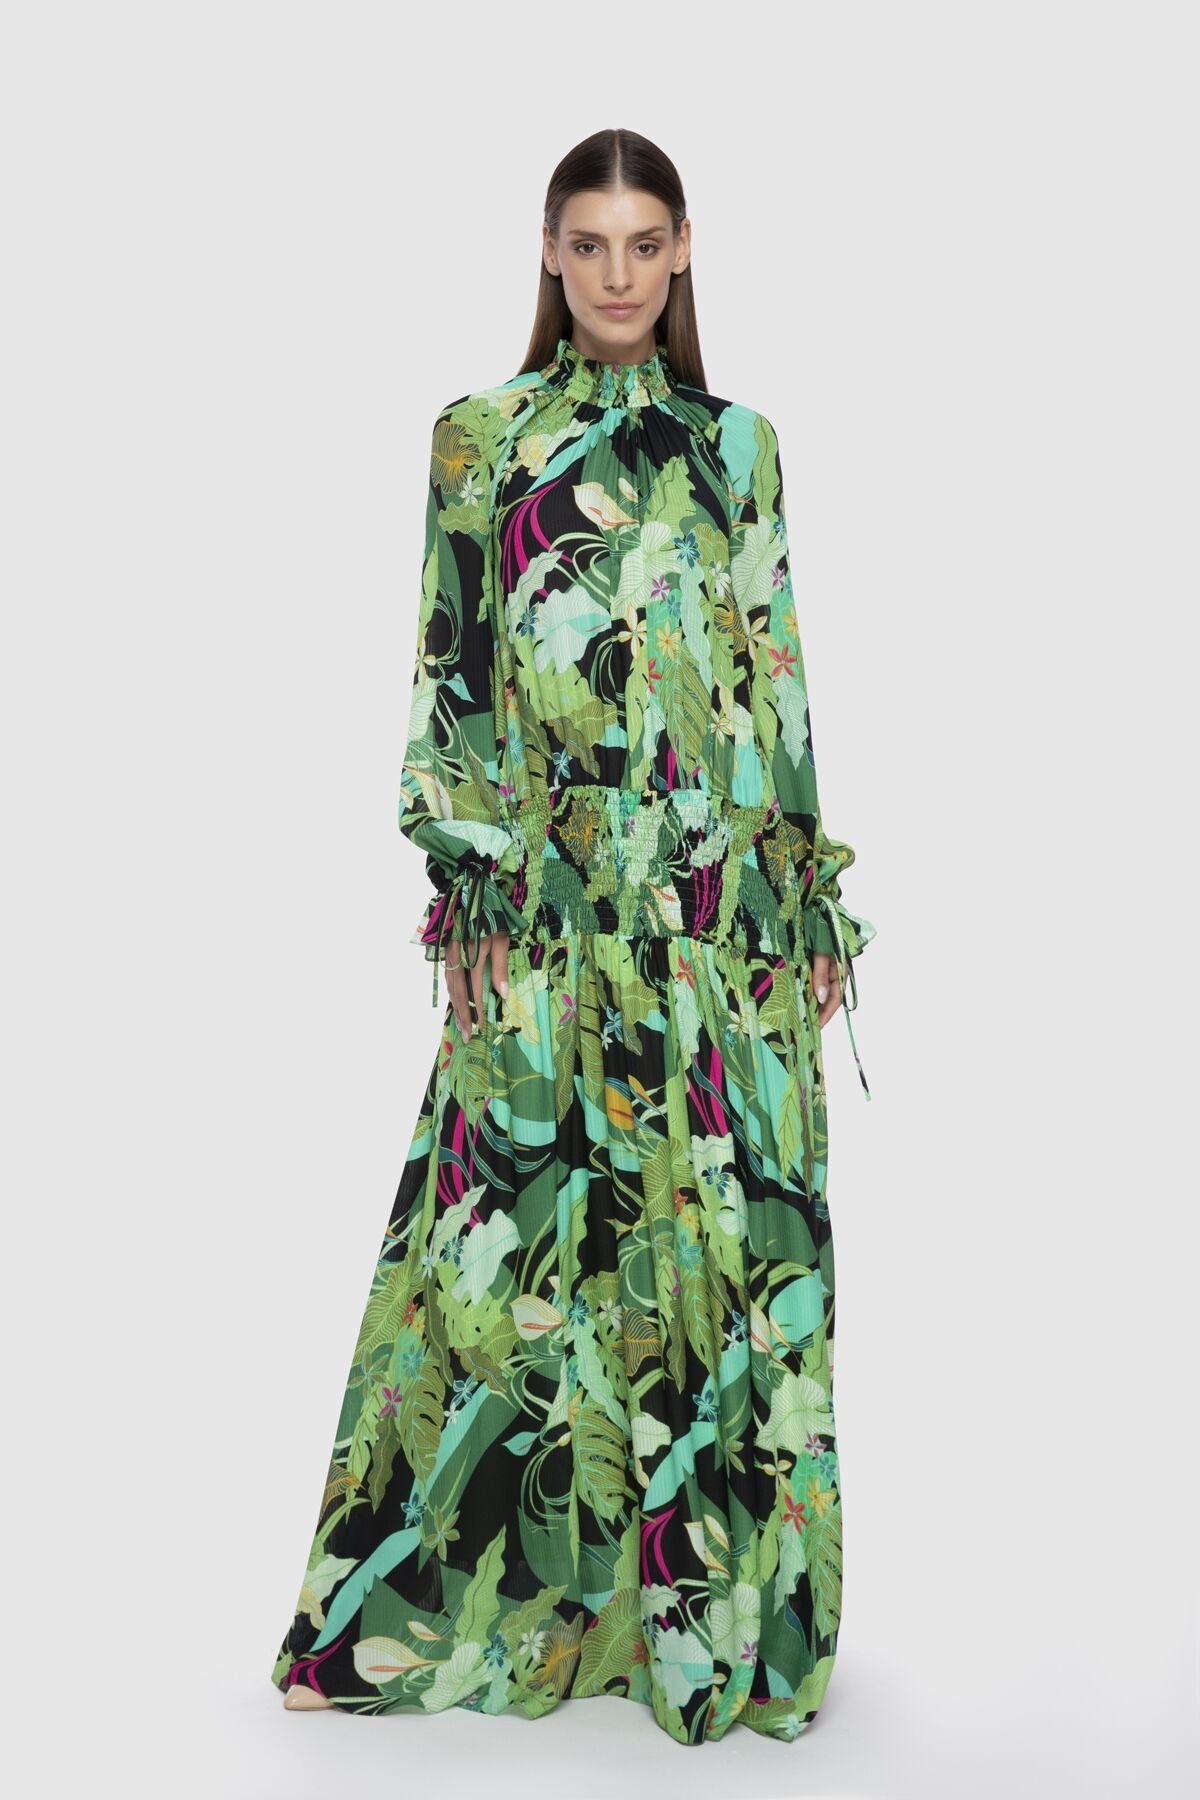 Elastic Detailed Patterned Green Long Dress